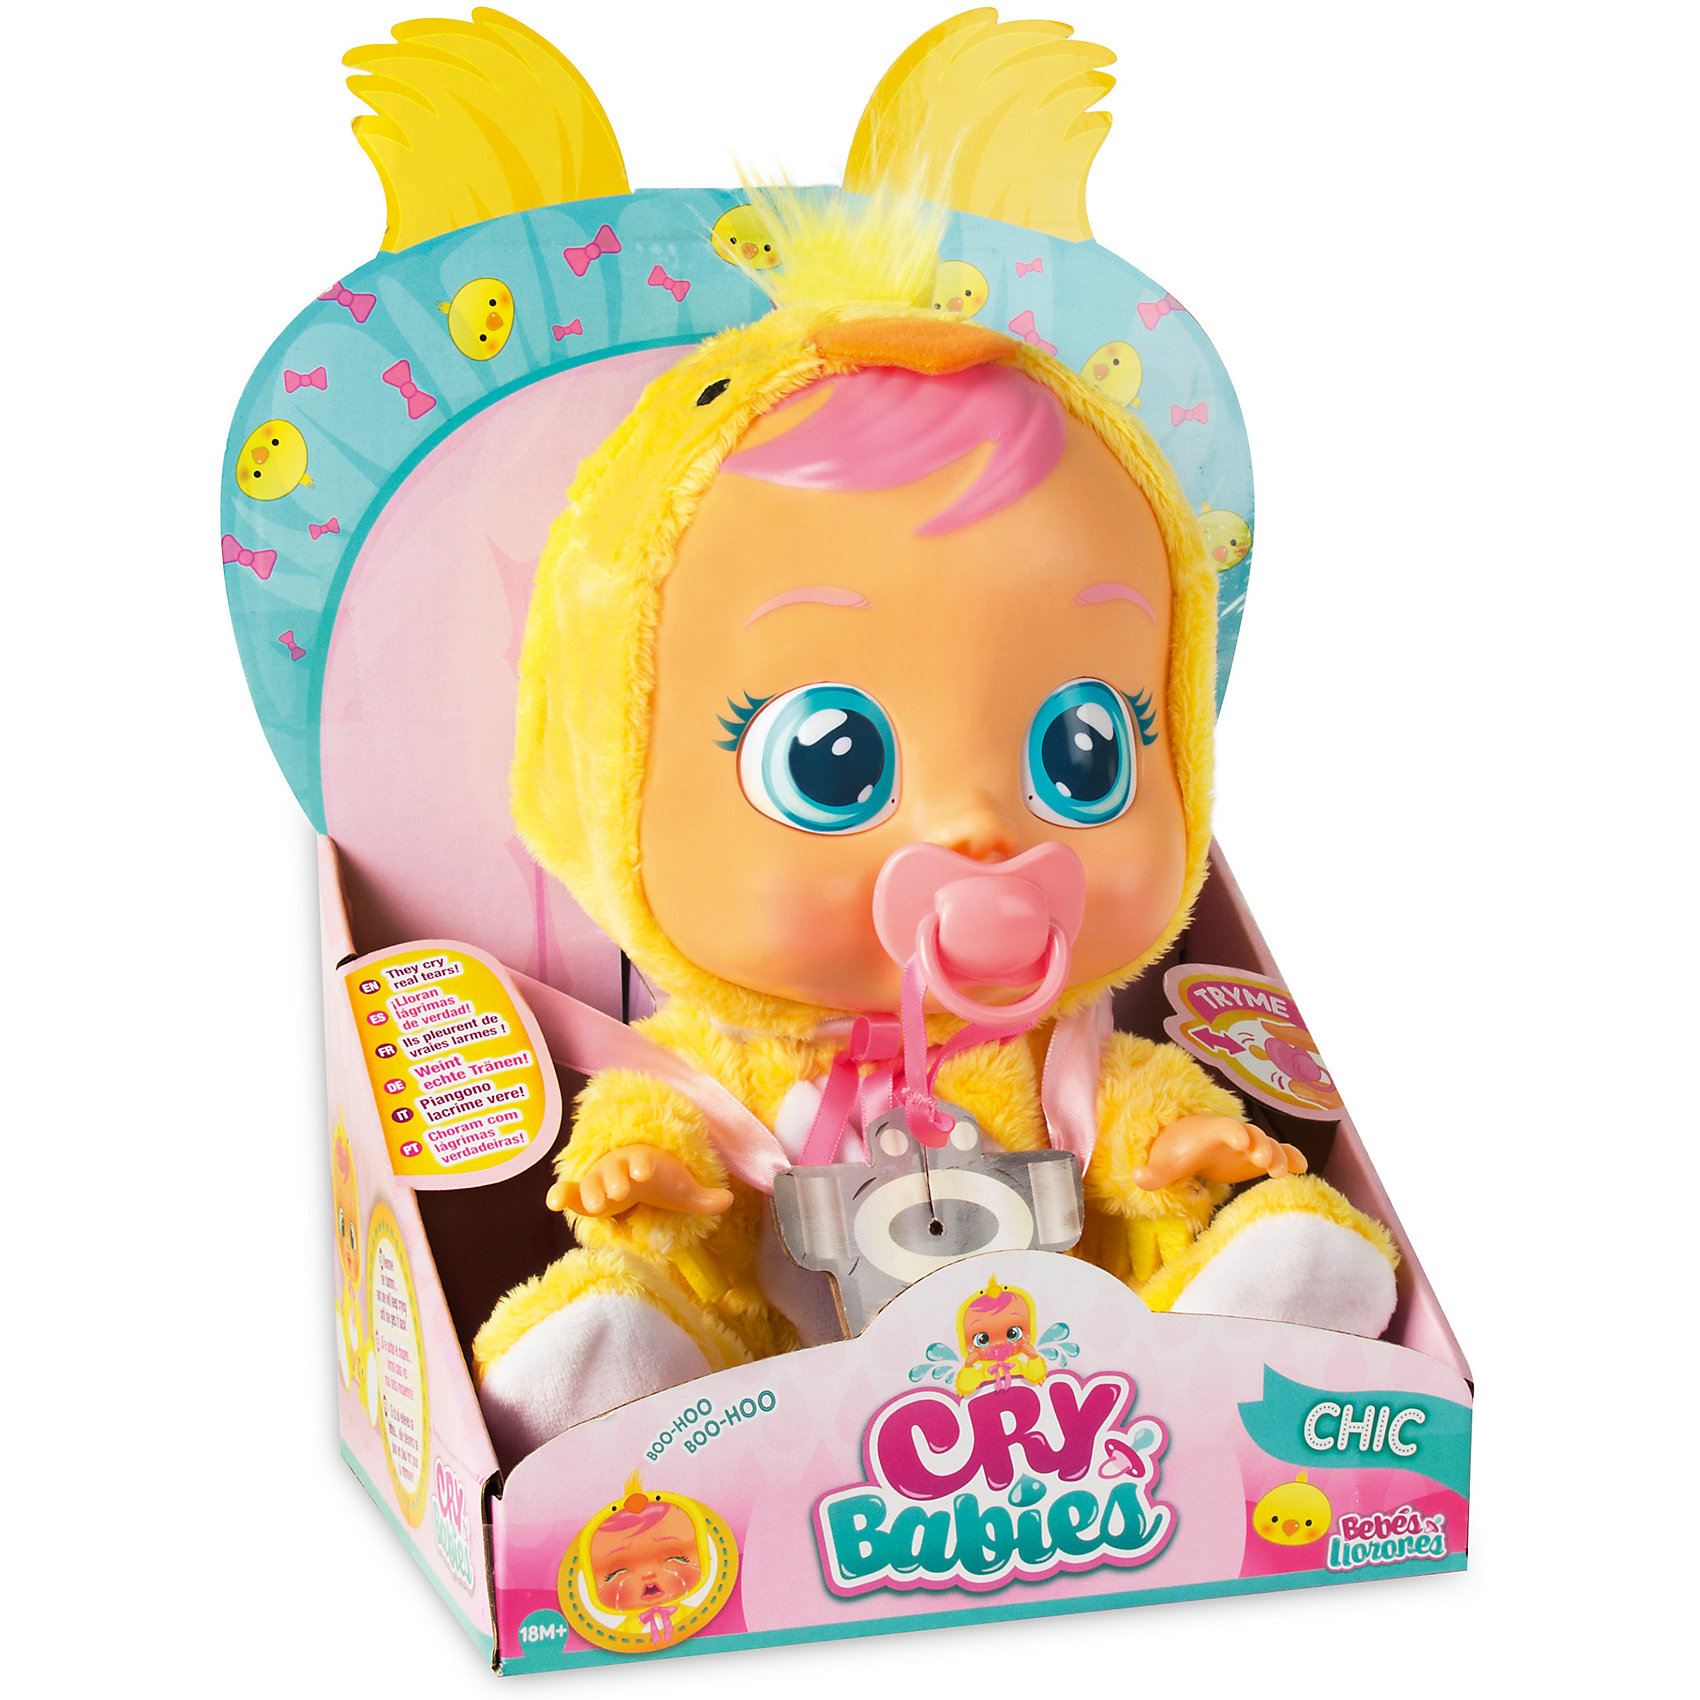 Плачущий младенец Cry Babies Chic IMC Toys 12032591